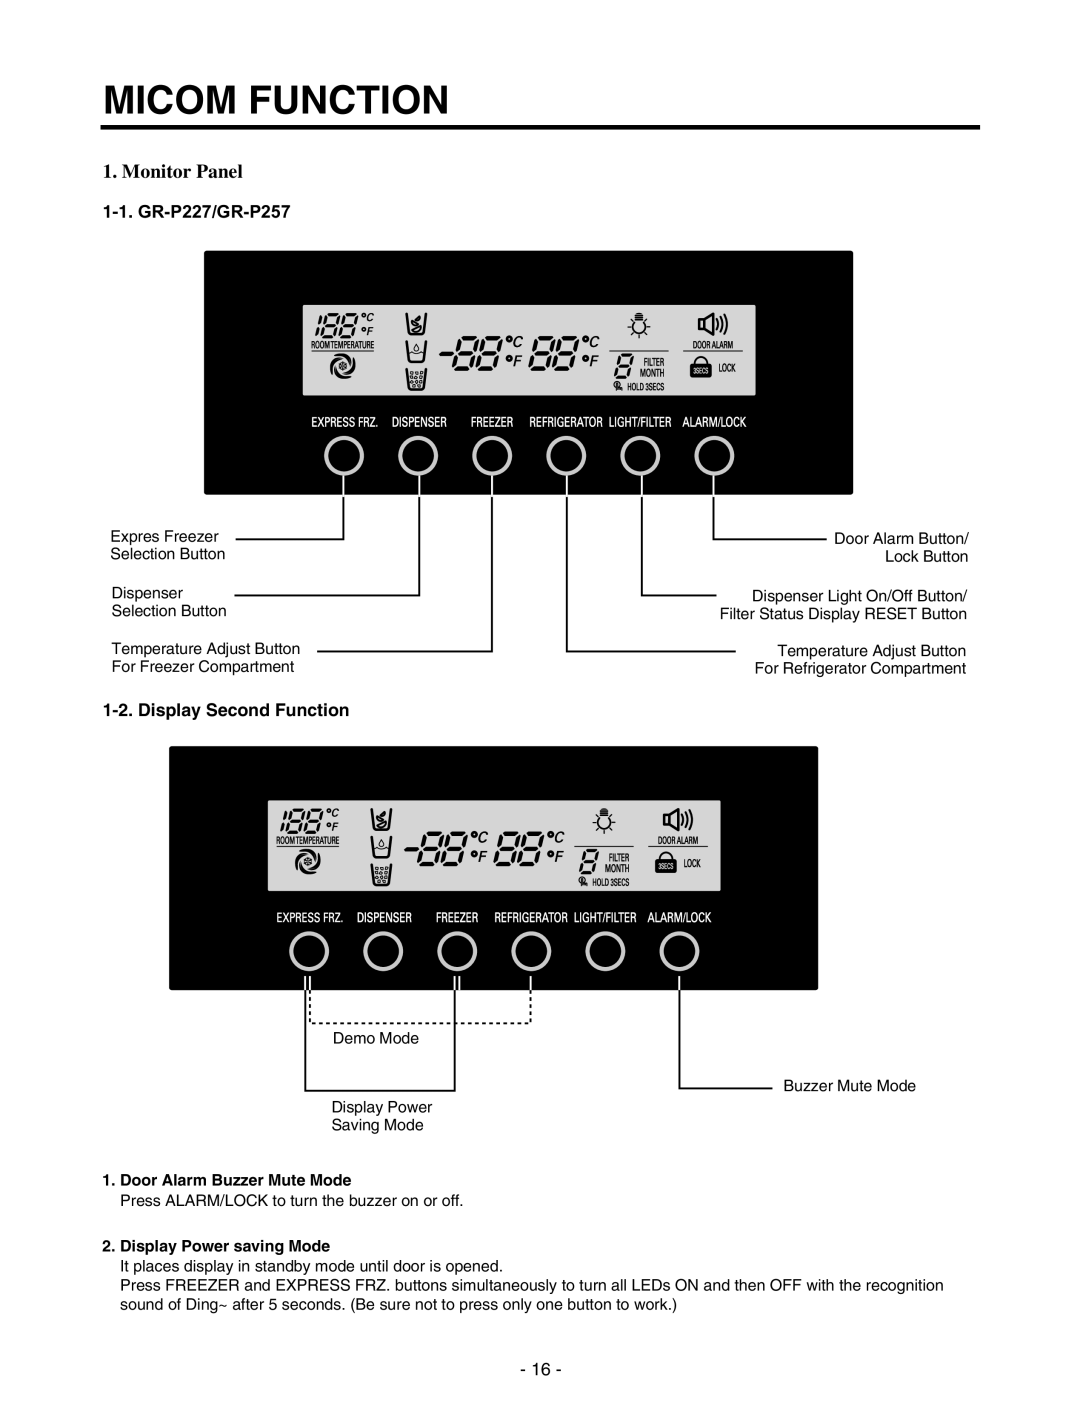 LG Electronics GR-P227/L227, GR-P257/L257 Micom Function, Monitor Panel, Display Second Function, GR-P227/GR-P257 